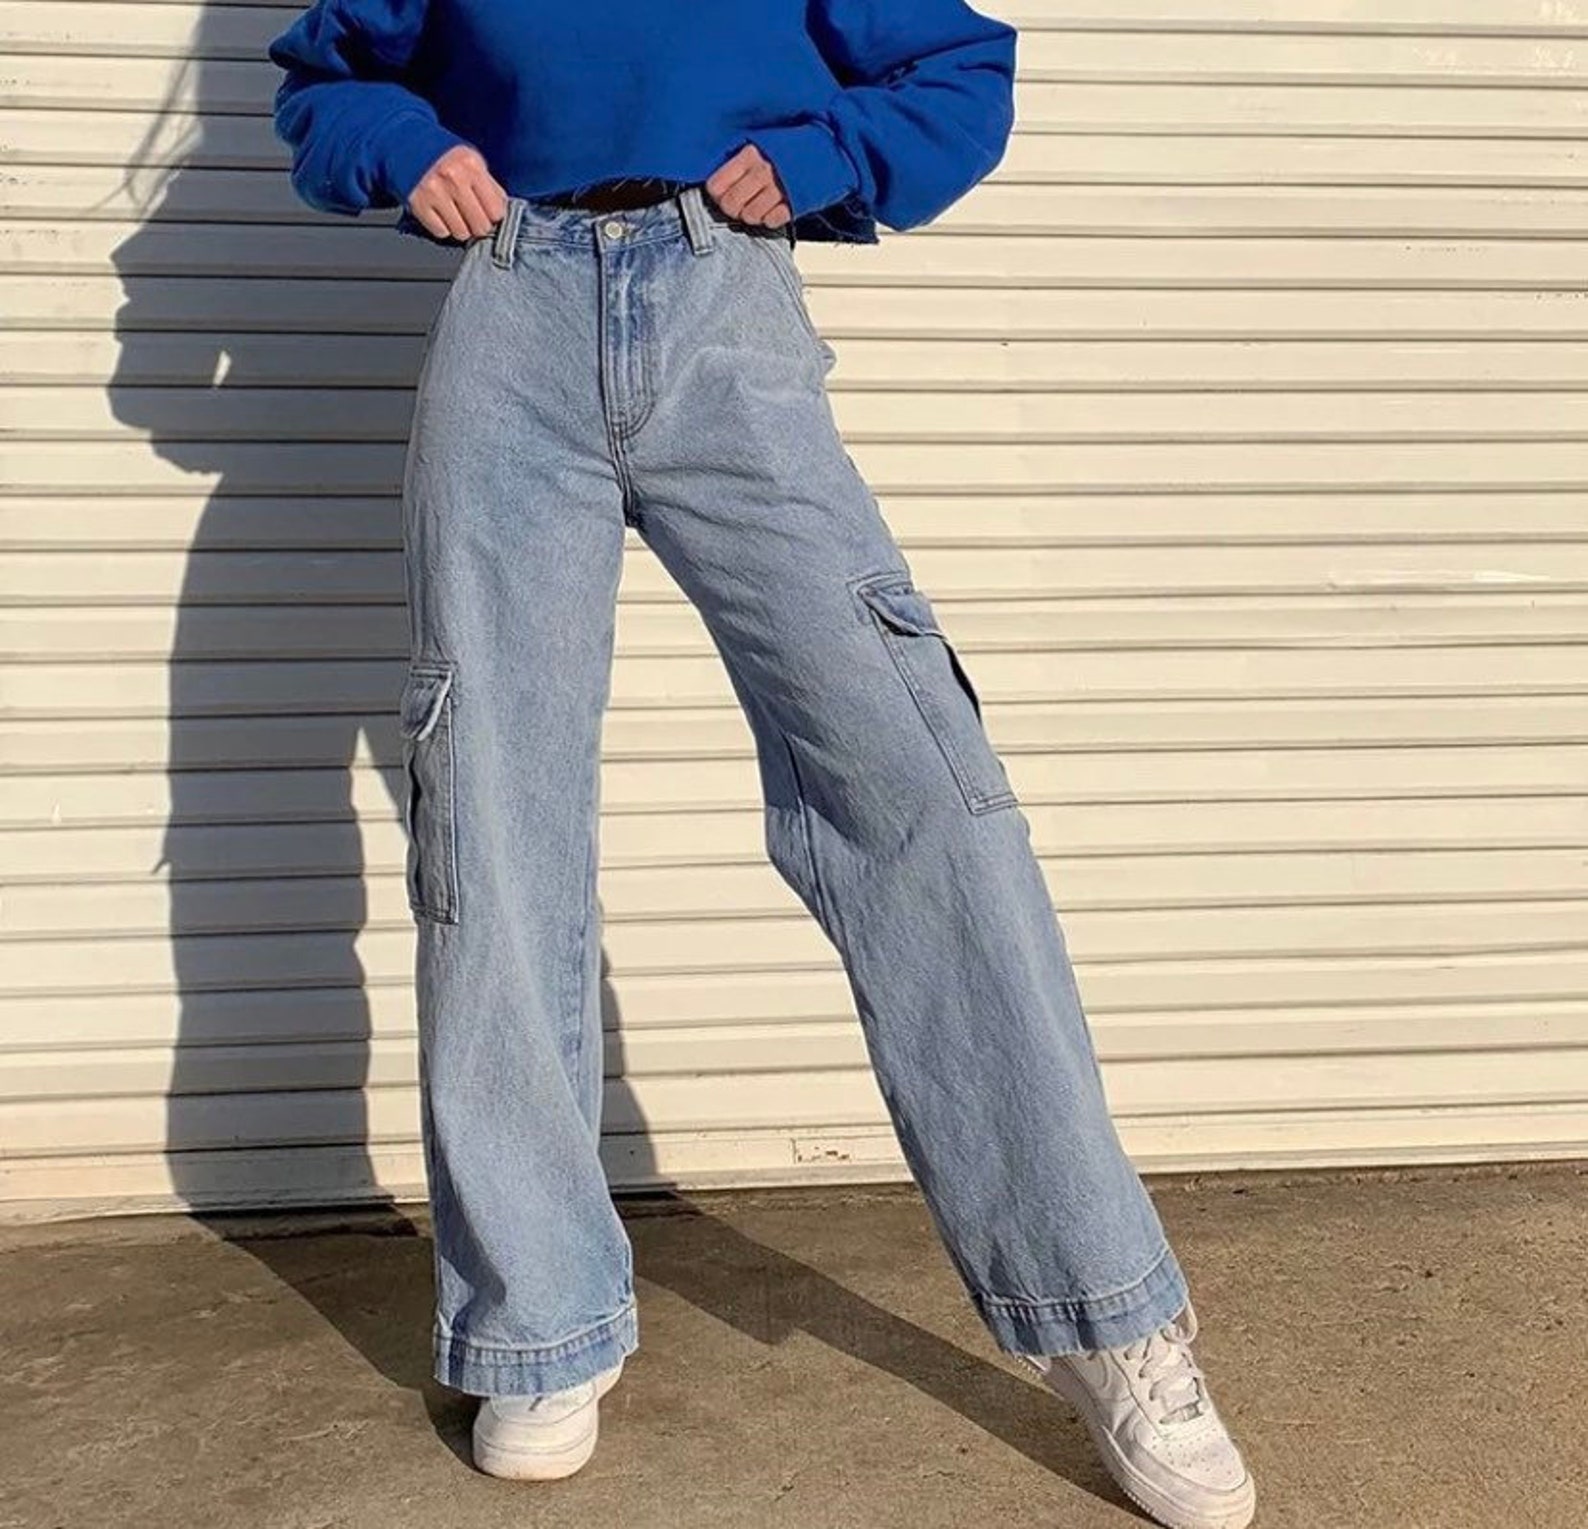 Trousers jeans cargo pants blue y2k baggy kawaii | Etsy